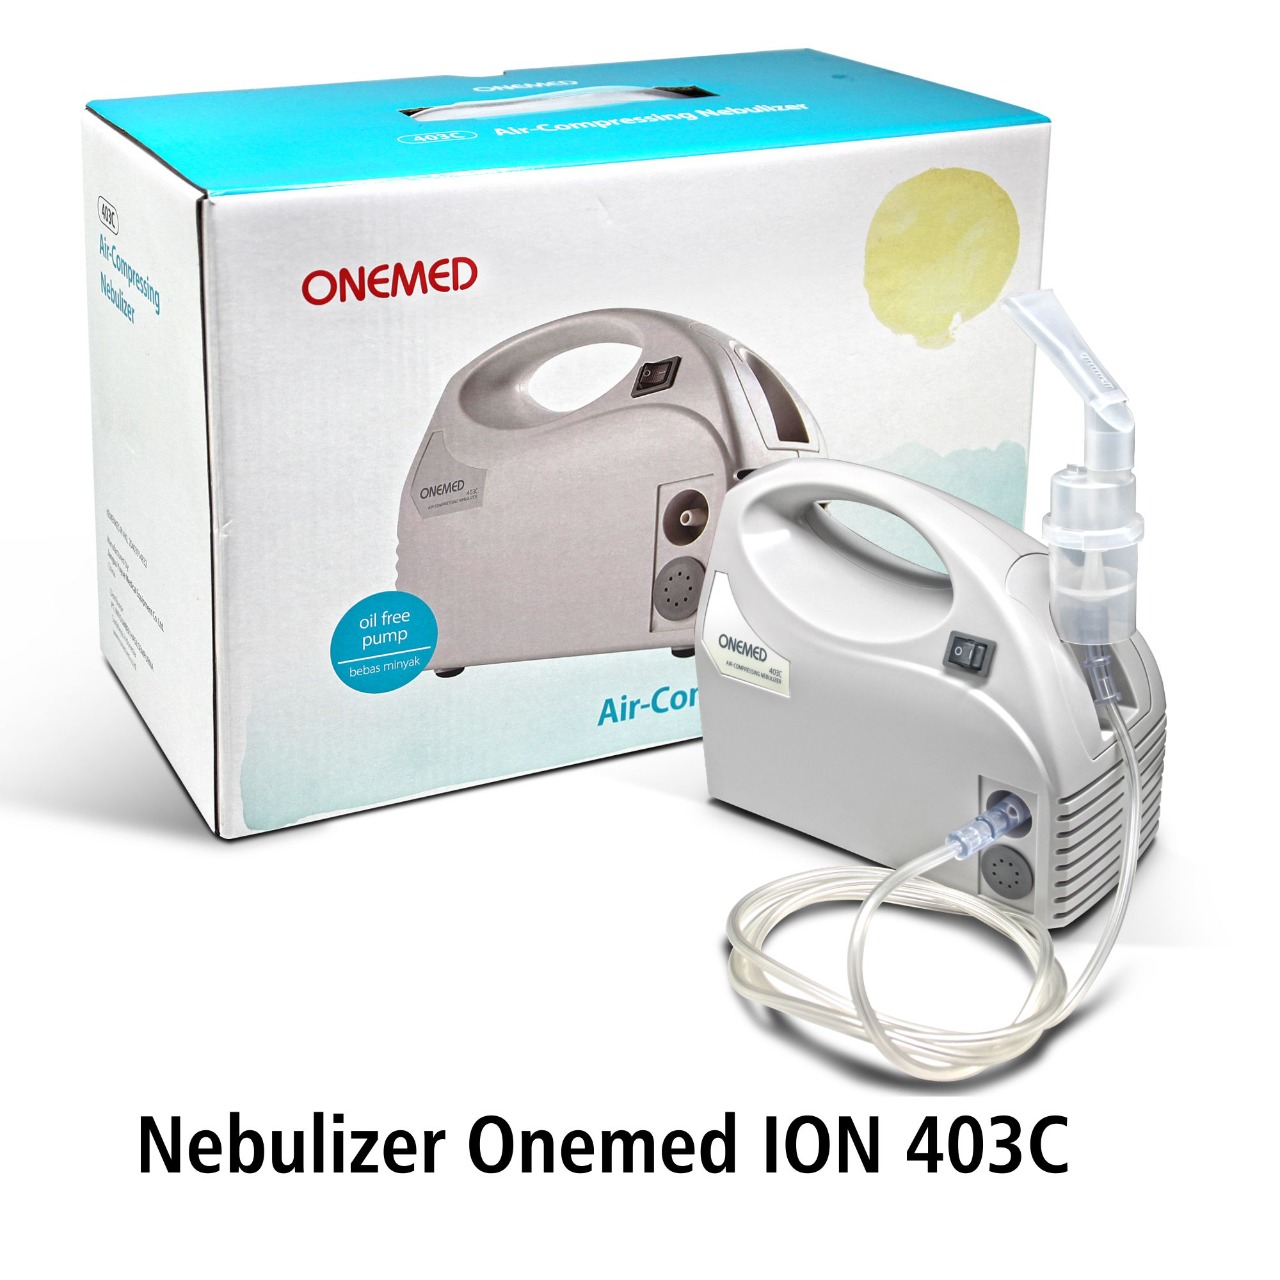 Nebulizer OneMed 403C